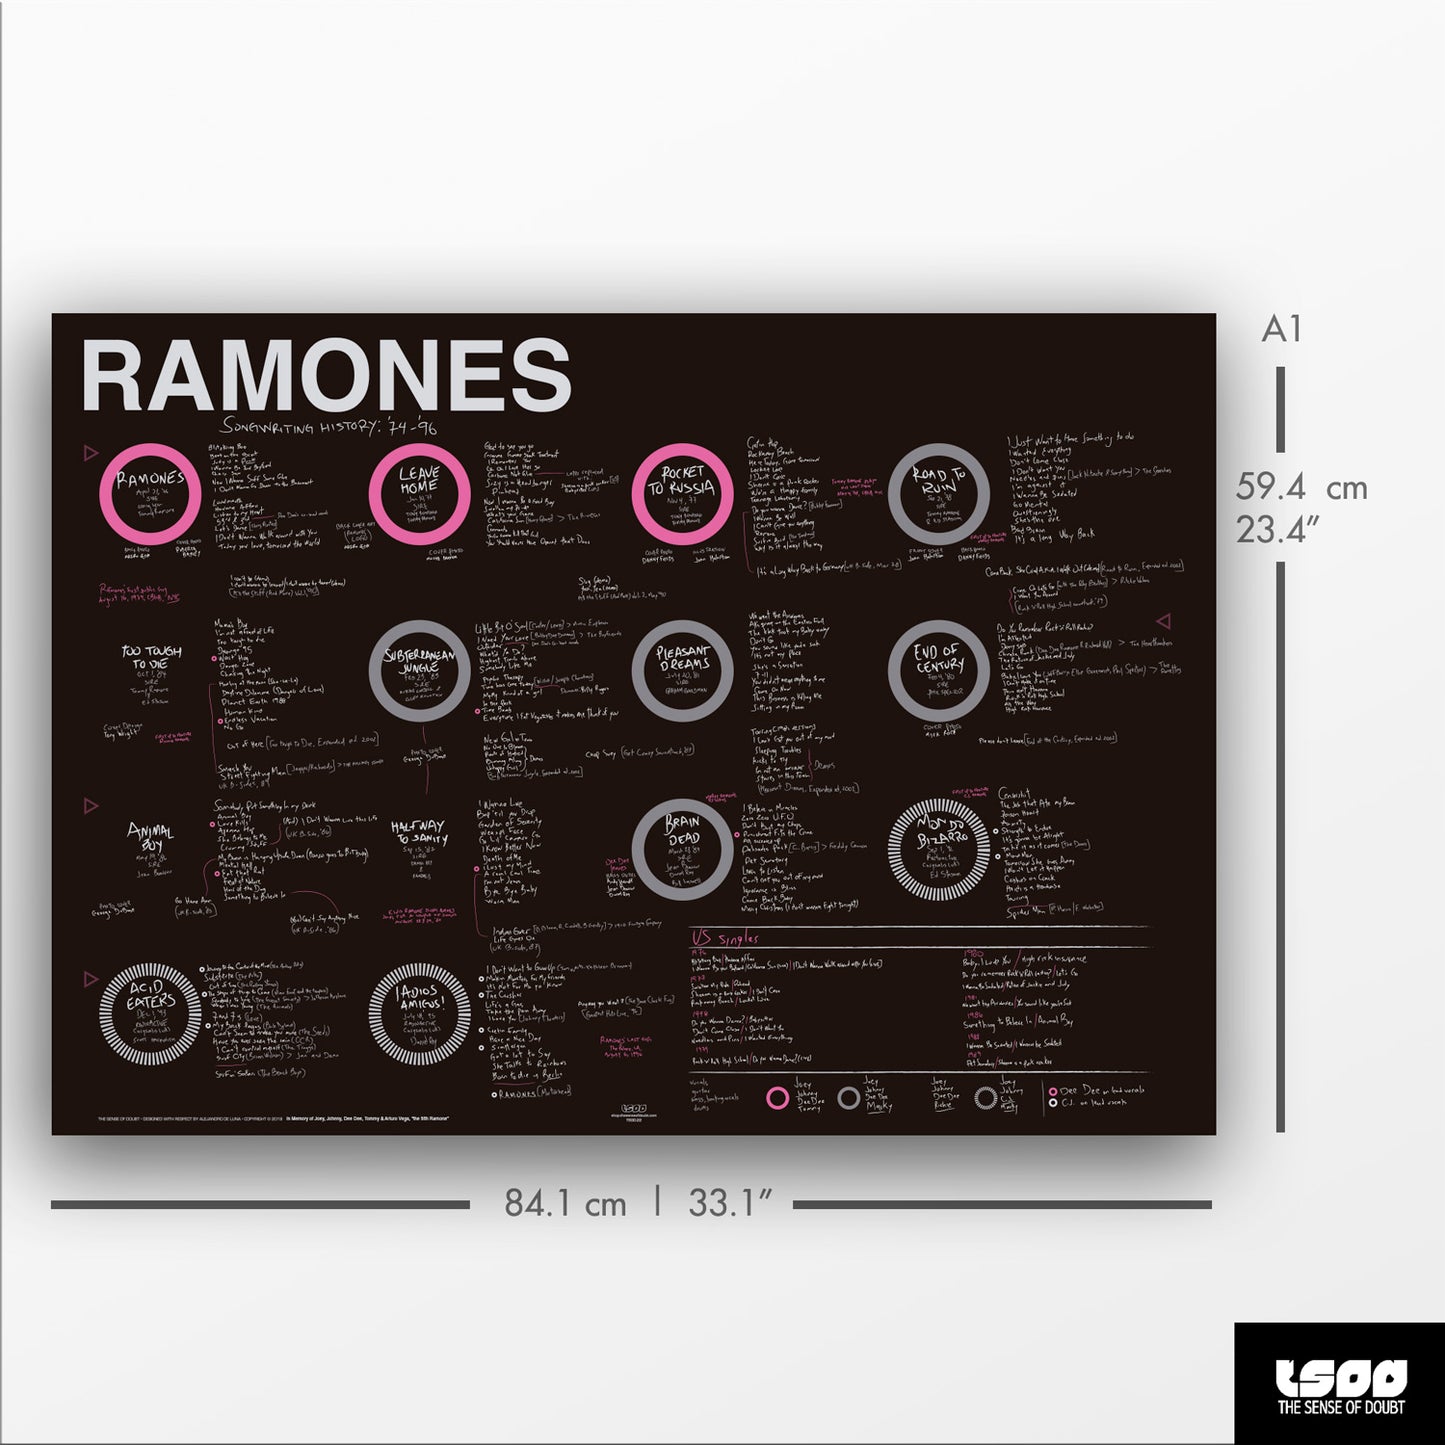 Ramones - Studio Albums & Singles (1974 - 1996)